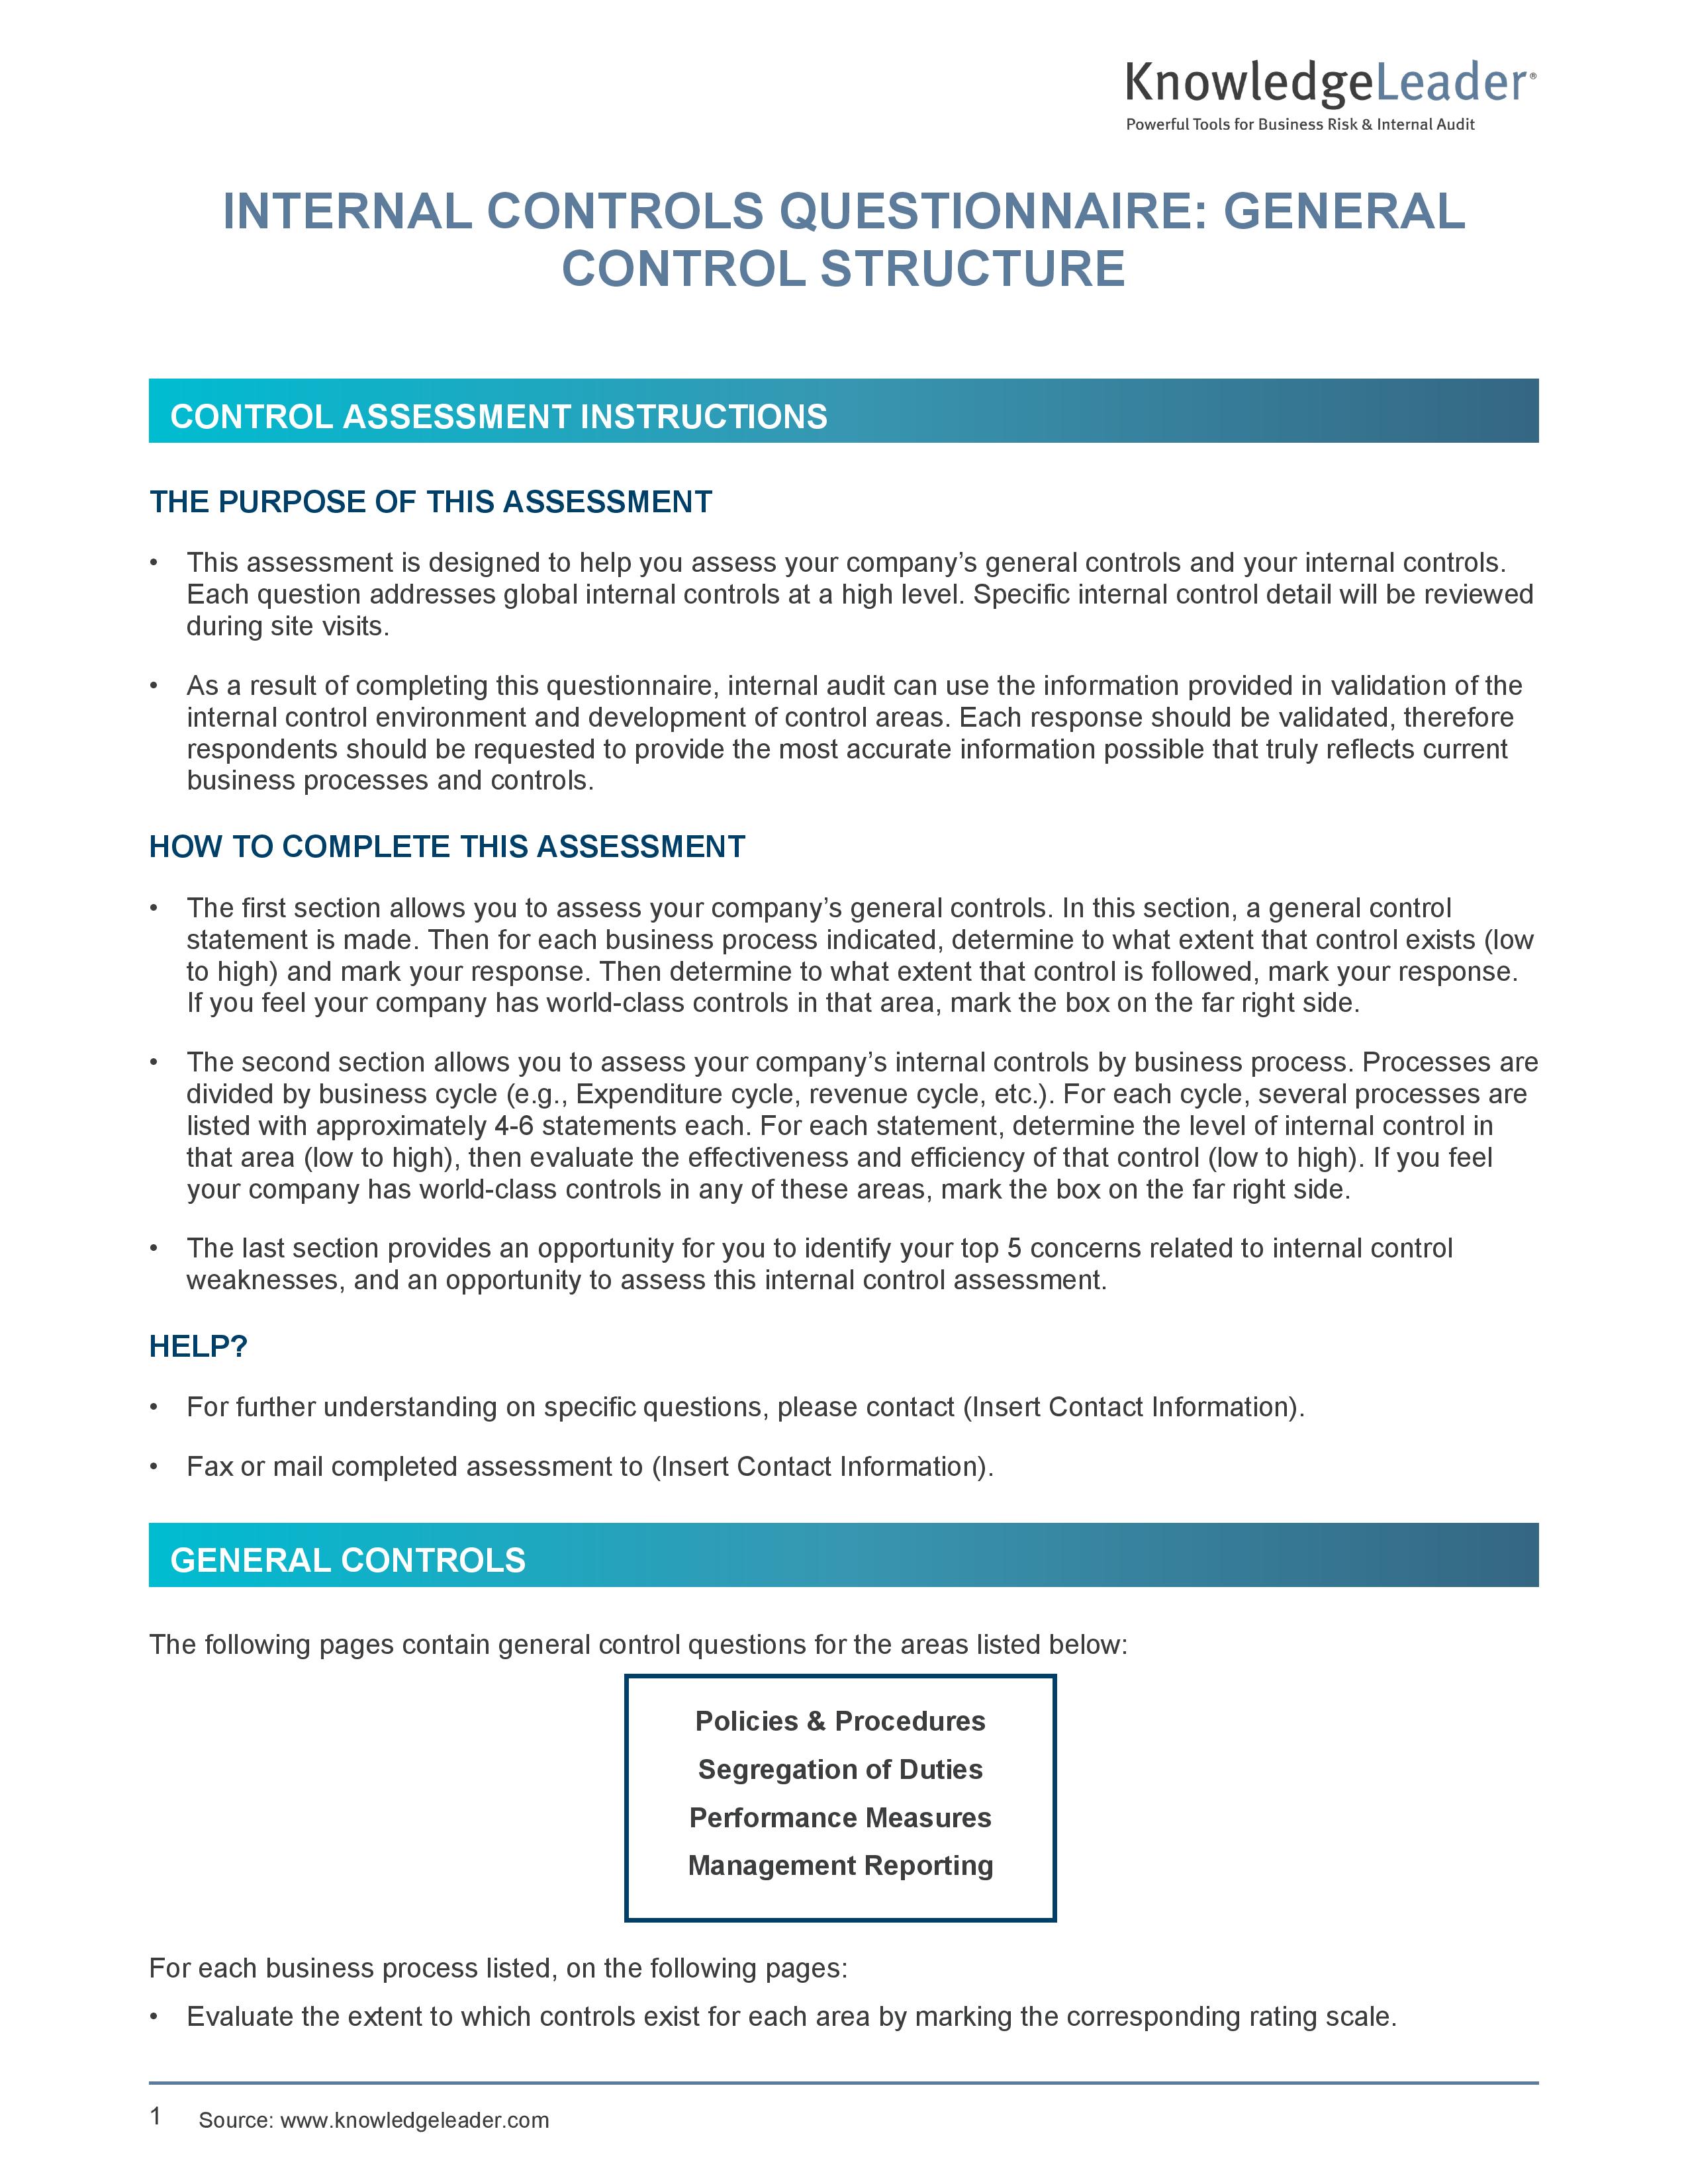 Internal Controls Structure Questionnaire